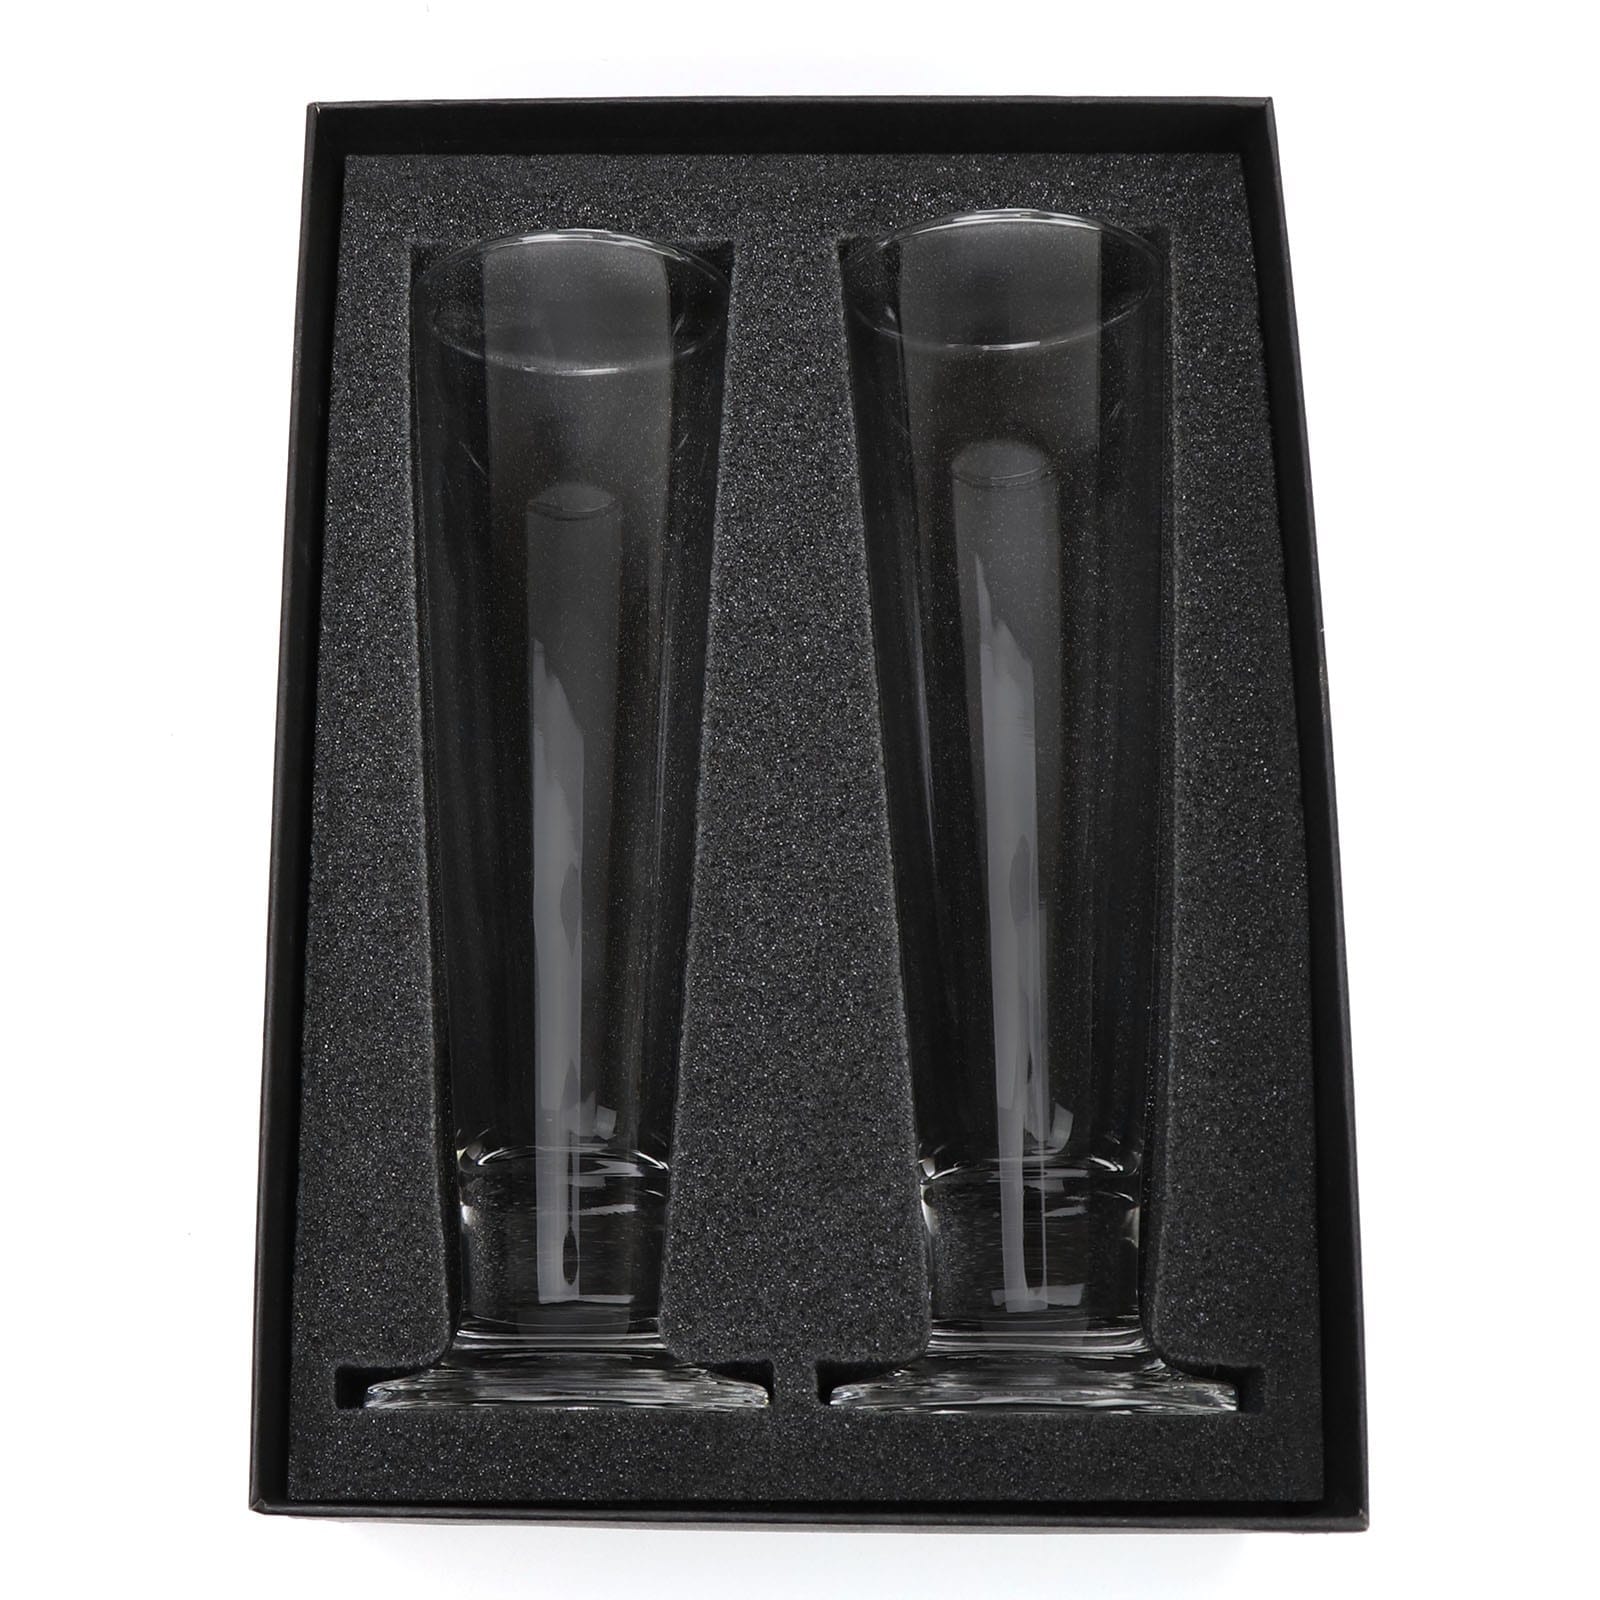 Drinkware Laser Engraved Double Pilsner Beer Glass Corporate Set champ